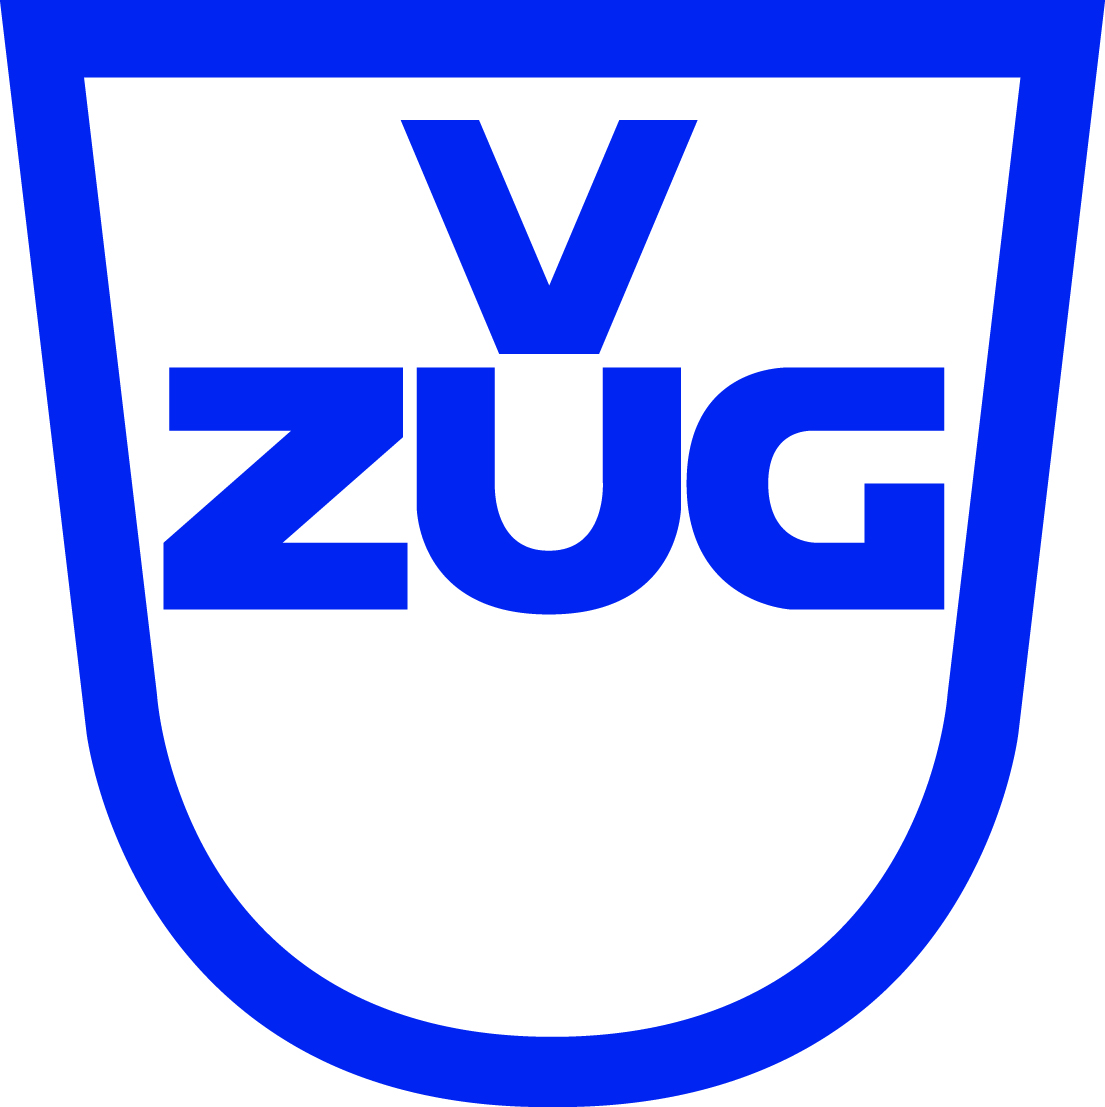 vzu0028 vzug logo vollfarbe cmyk f01